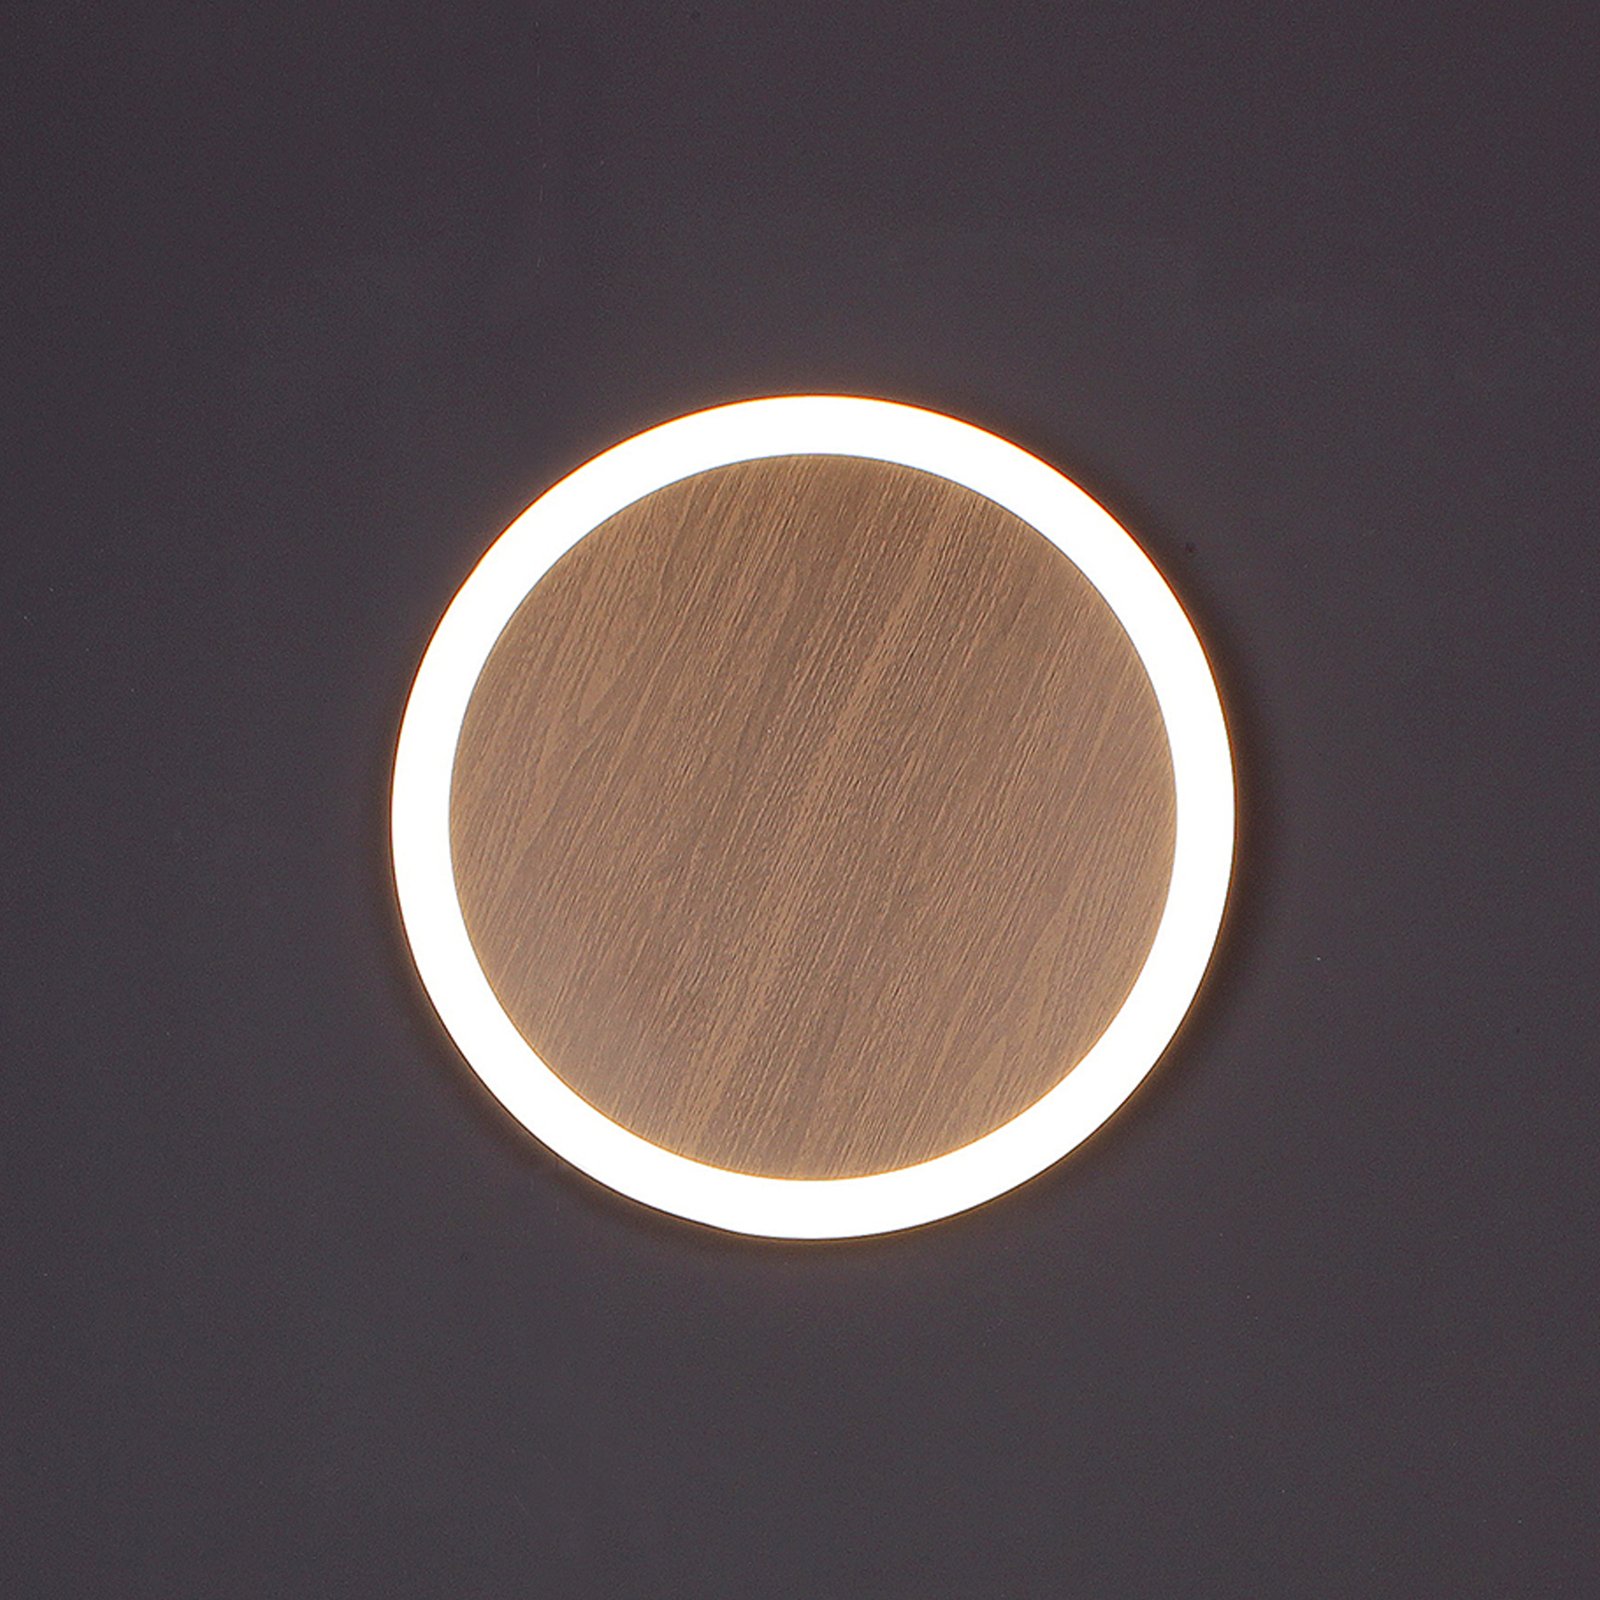 LED svetlo Morton 3-step-dim vzhľad dreva 40 cm